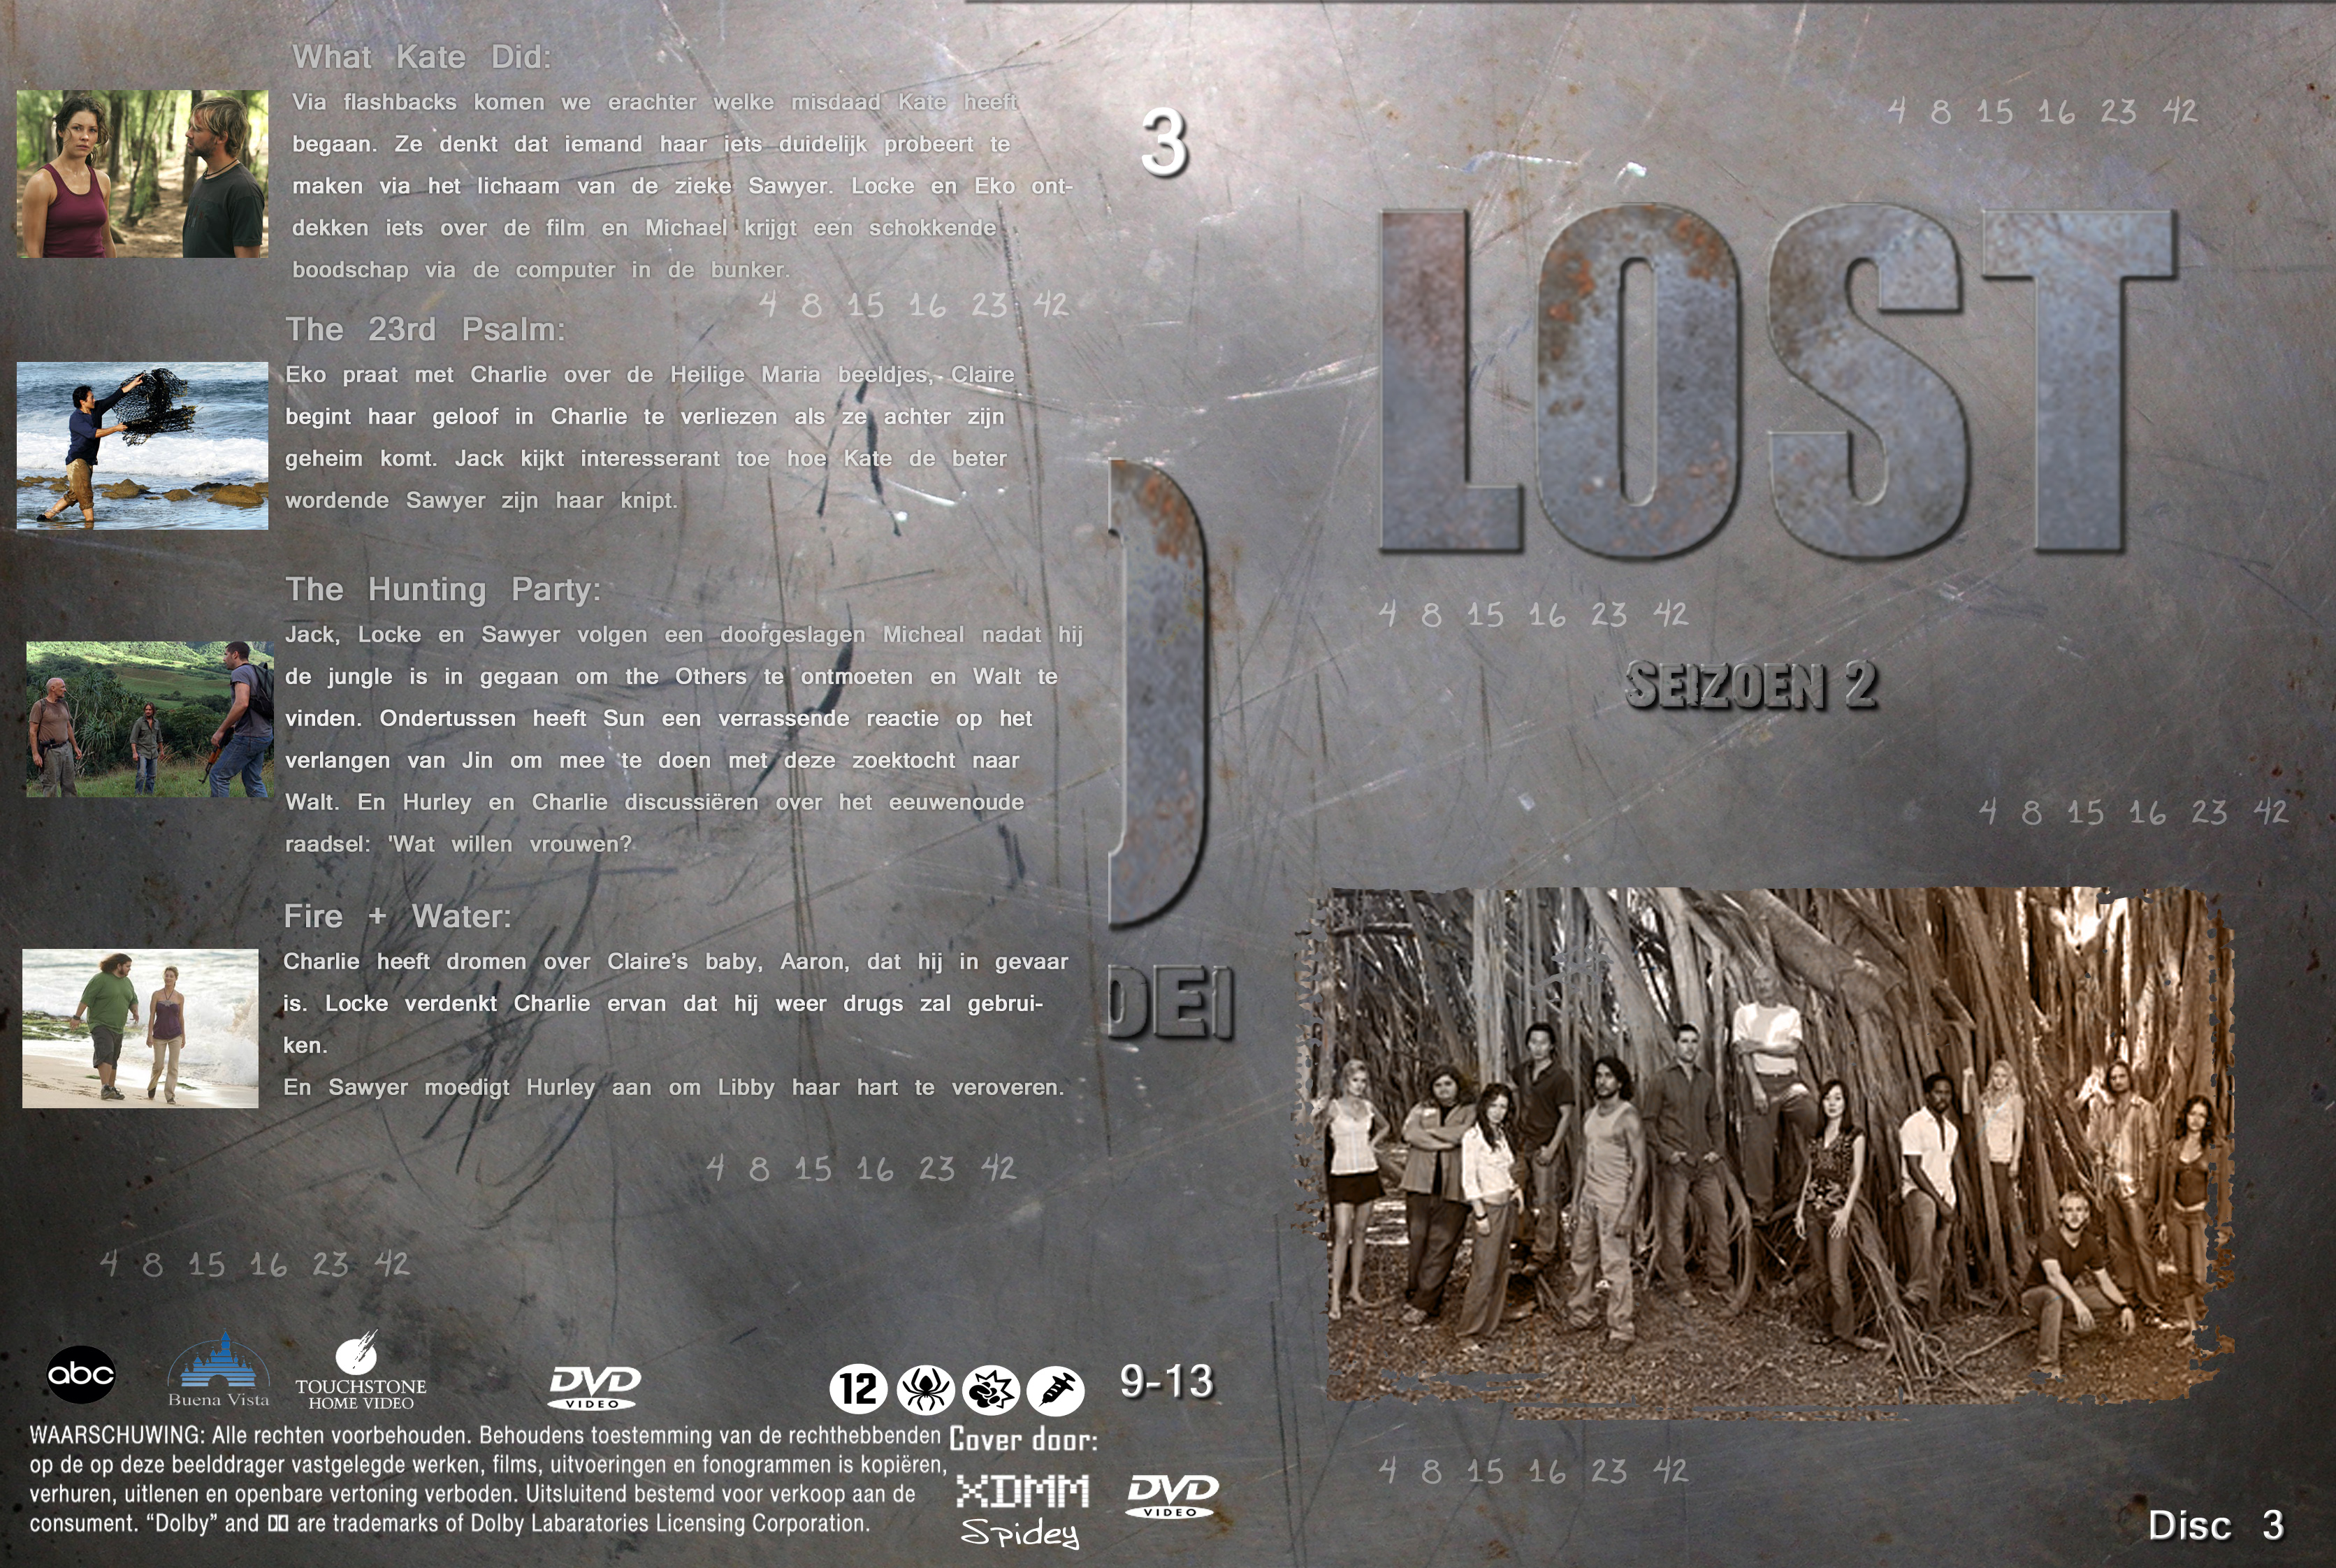 Lost Seizoen 2 dvd 3